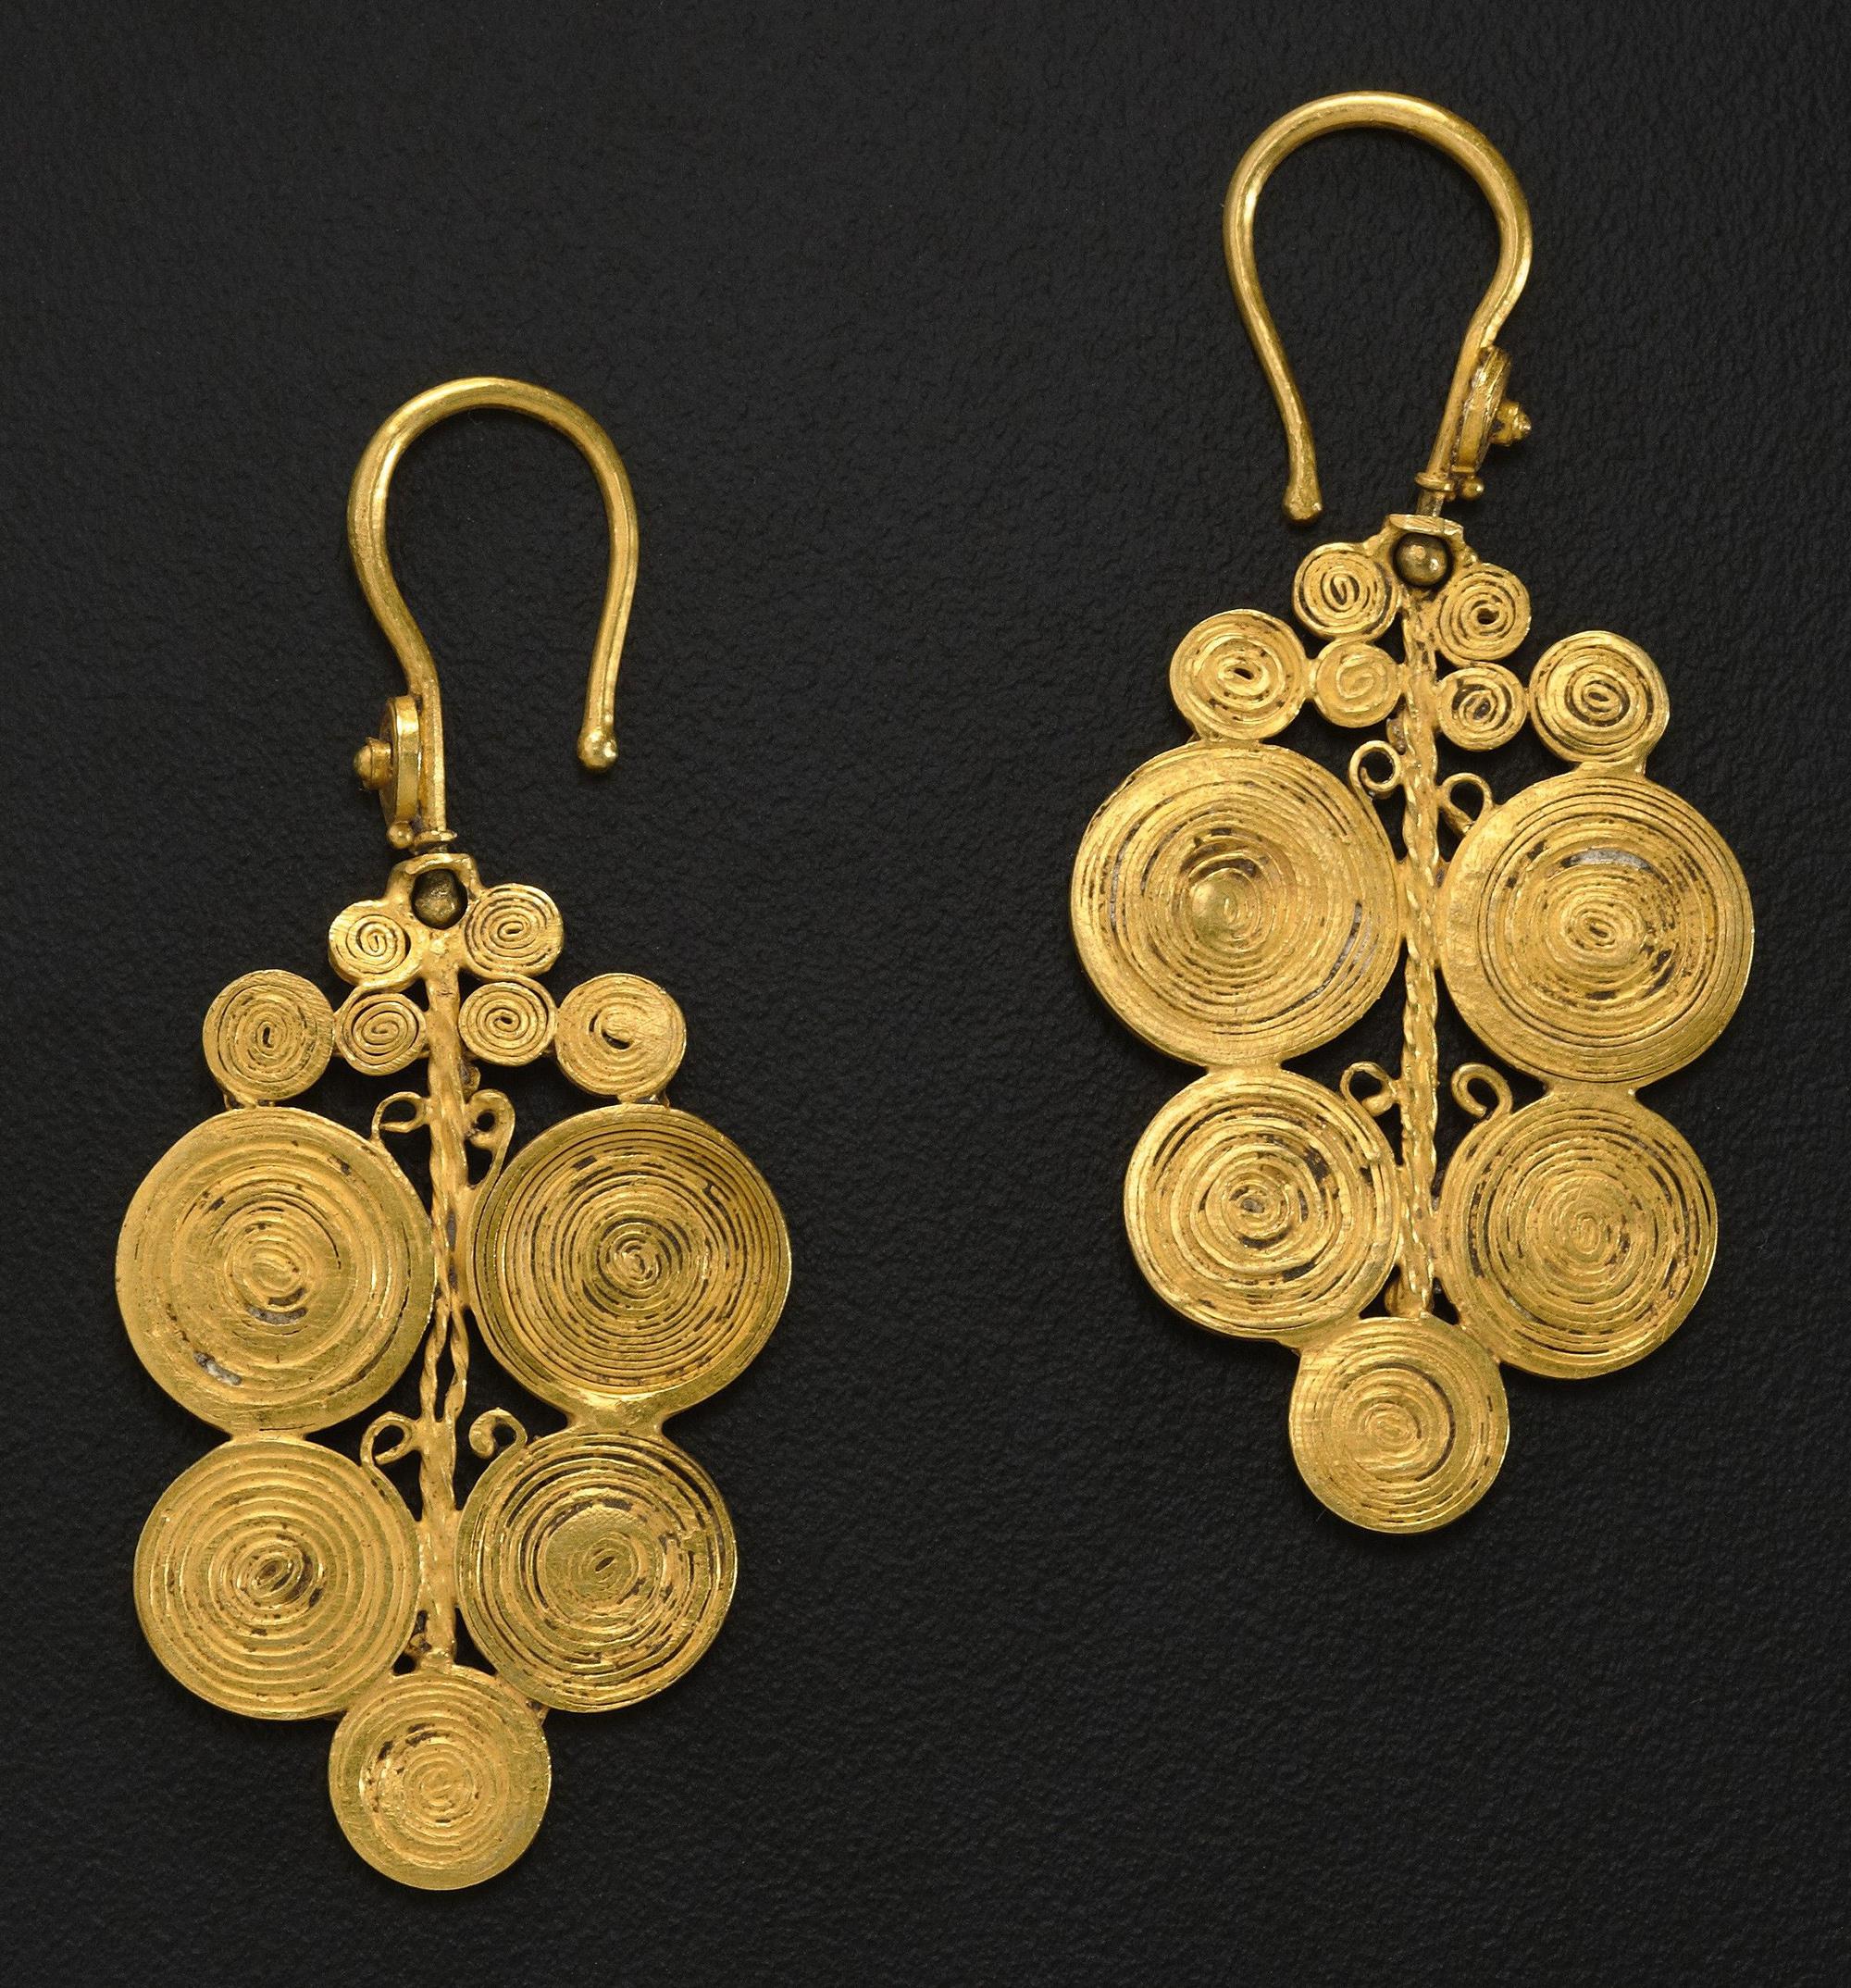 Historical Artifacts - Two gold filigree earrings. Java, Indonesia, 11th–14th century AD u/MunakataSennin